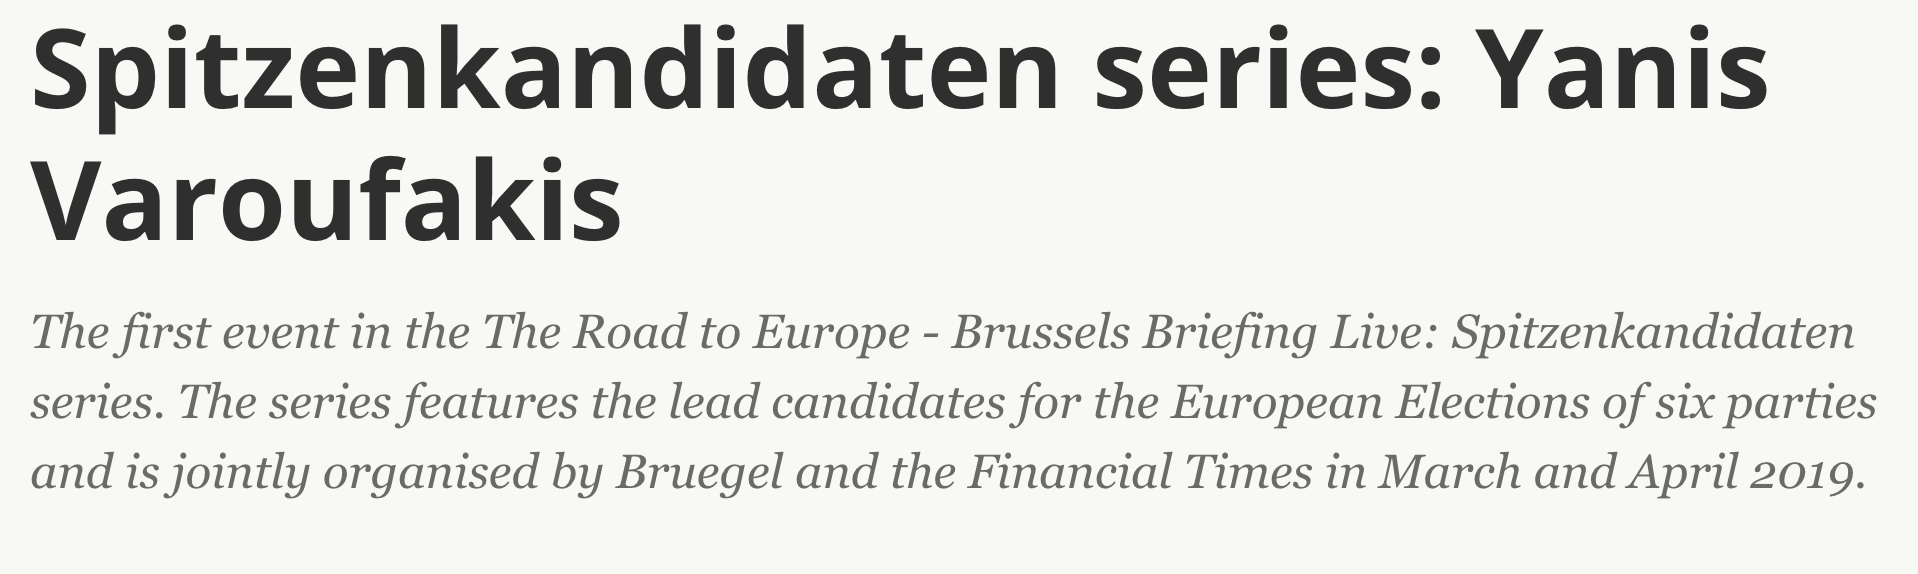 The Breugel-Financial Times Spitzenkandidaten series: A debate with Yanis Varoufakis